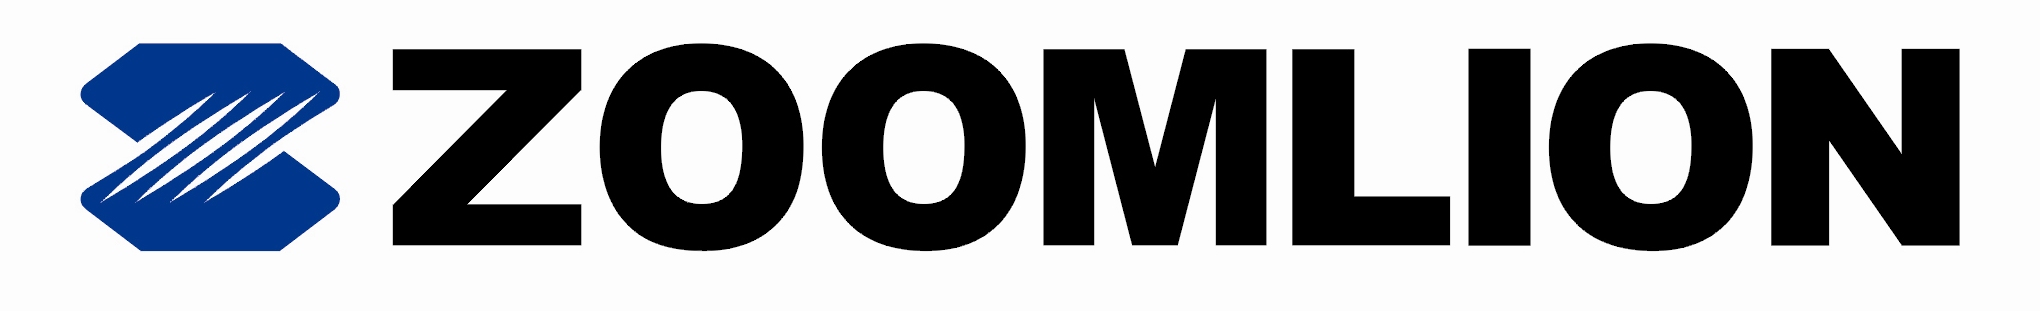 Zoomlion Brand Logo